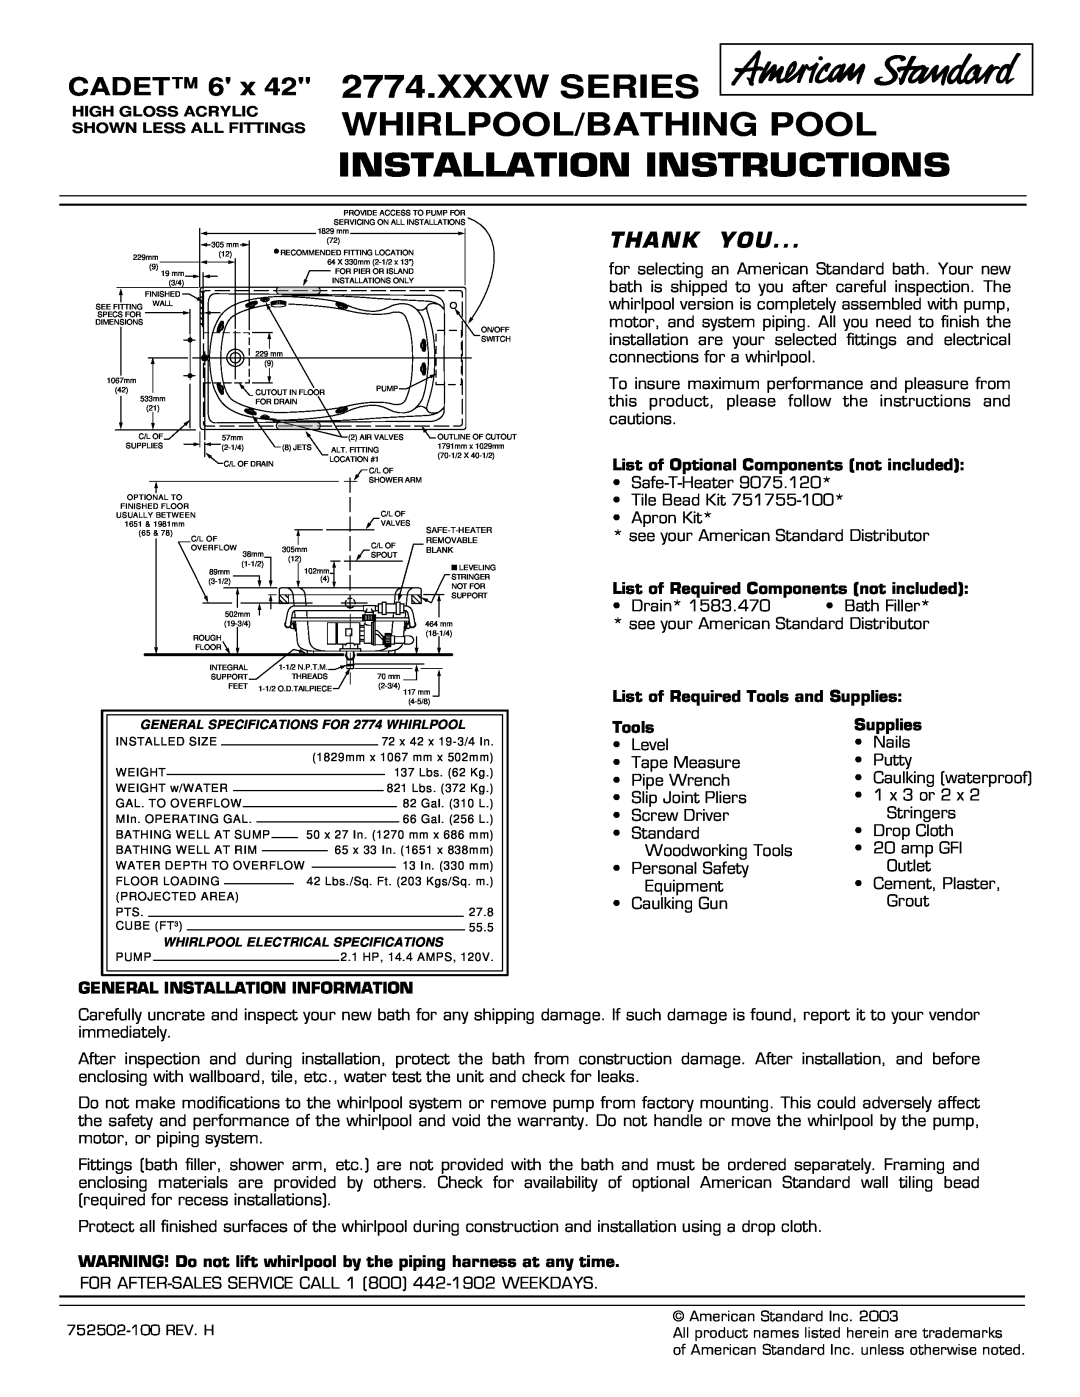 American Standard 2774.XXXW installation instructions Xxxw Series Whirlpool/Bathing Pool, Installation Instructions, Tools 